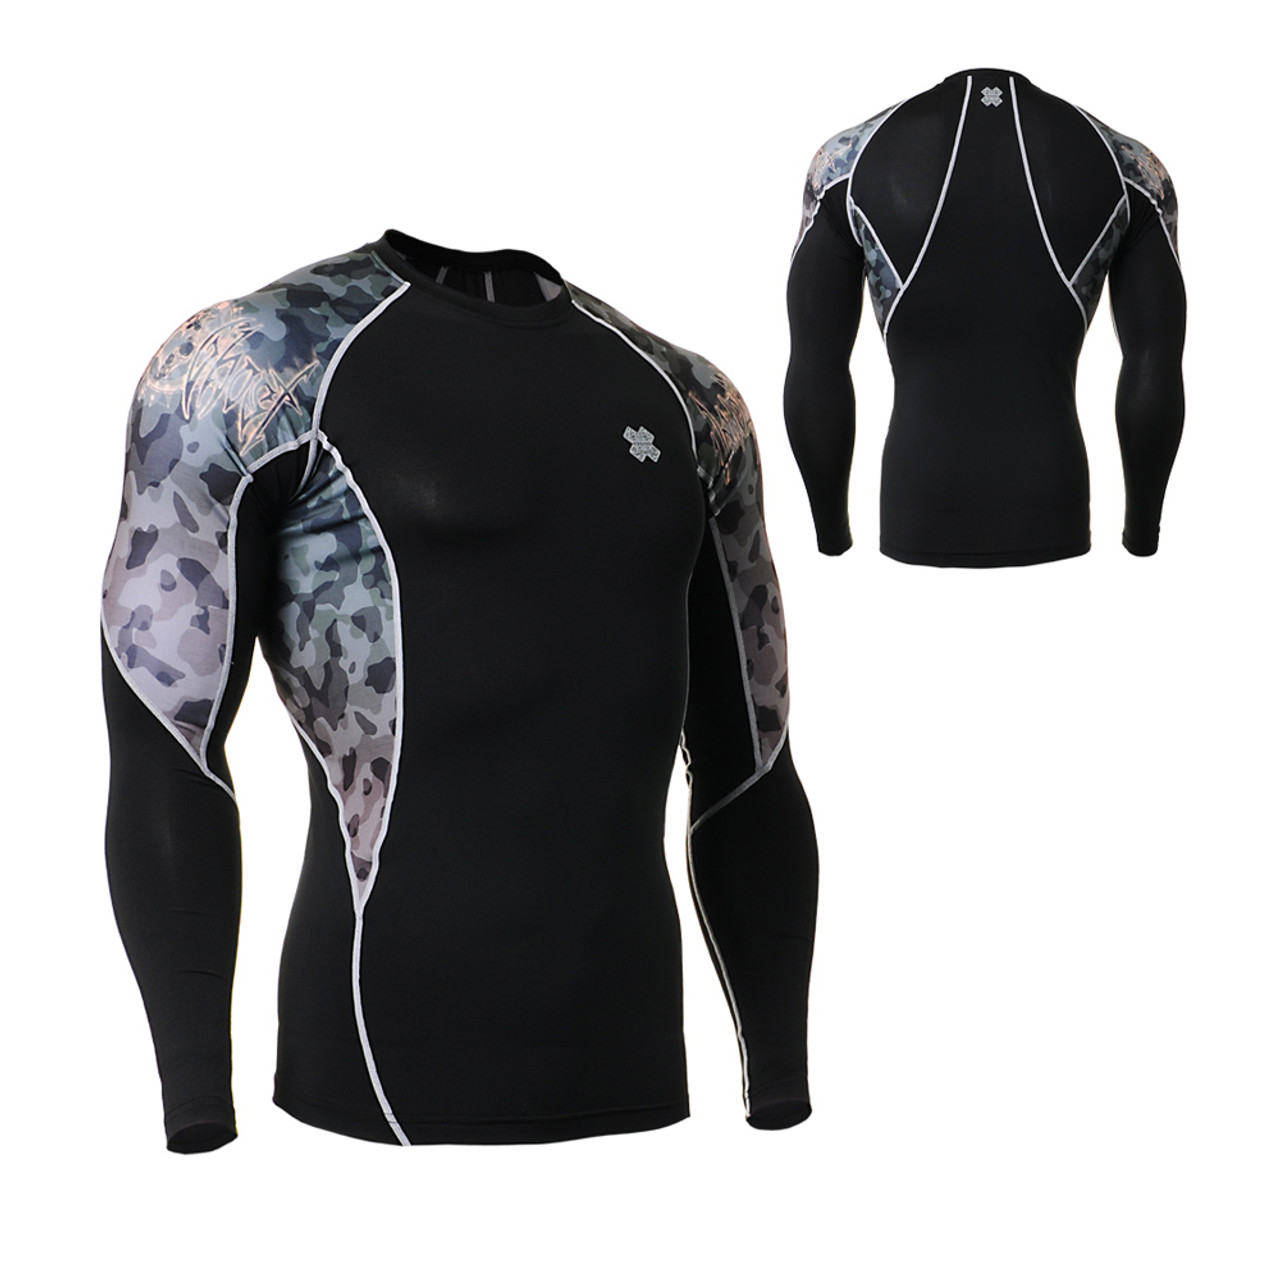 FIXGEAR C2L-B45 Skin tights Compression Base Layer Long Sleeve Shirts